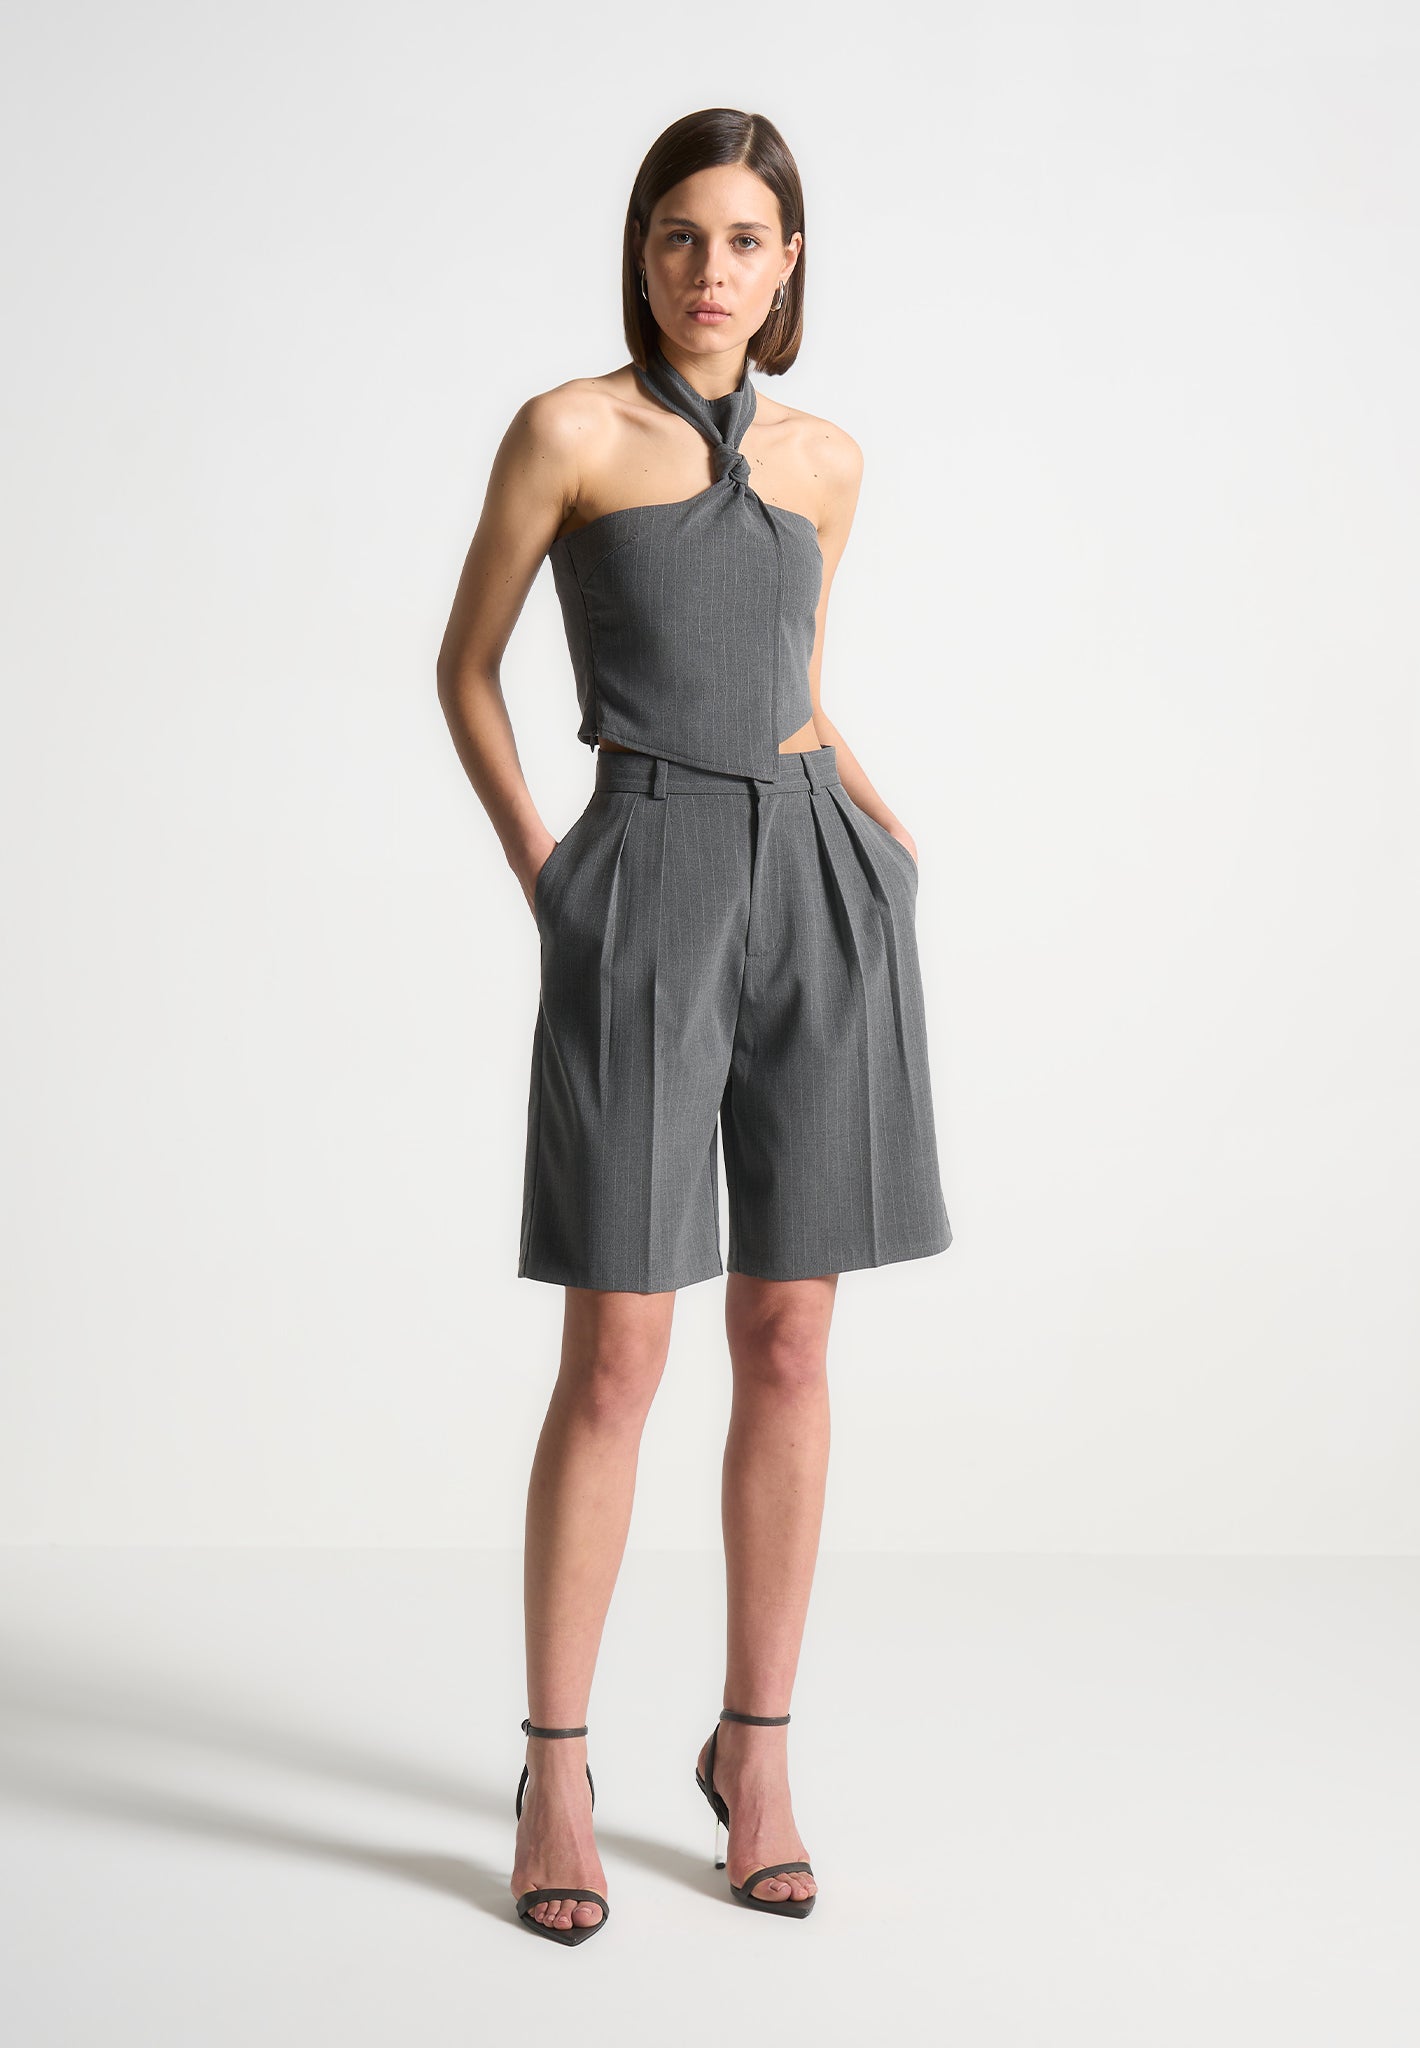 pinstripe-tailored-city-shorts-grey